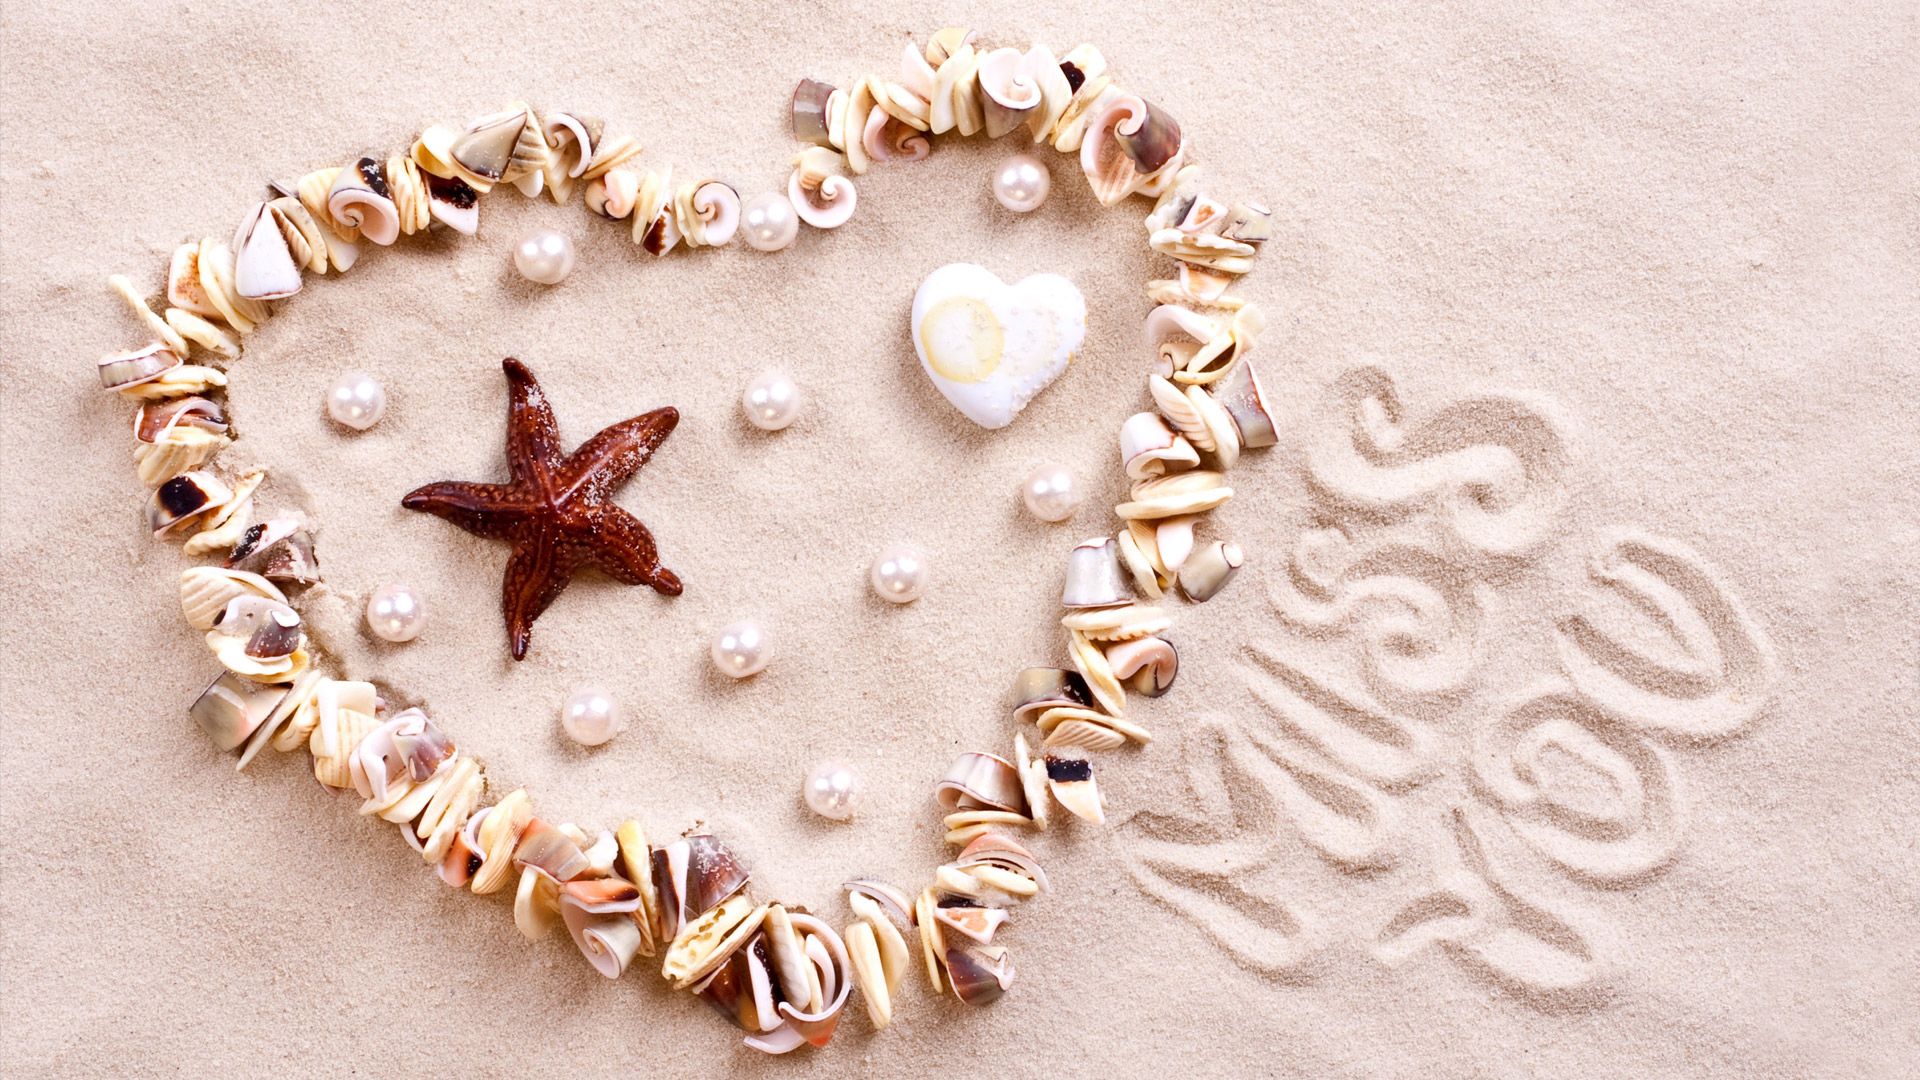 фото любовь, сердце, морские звезды, ракушка, берег, love image, heart, starfish, shell, shore, 4k (horizontal)